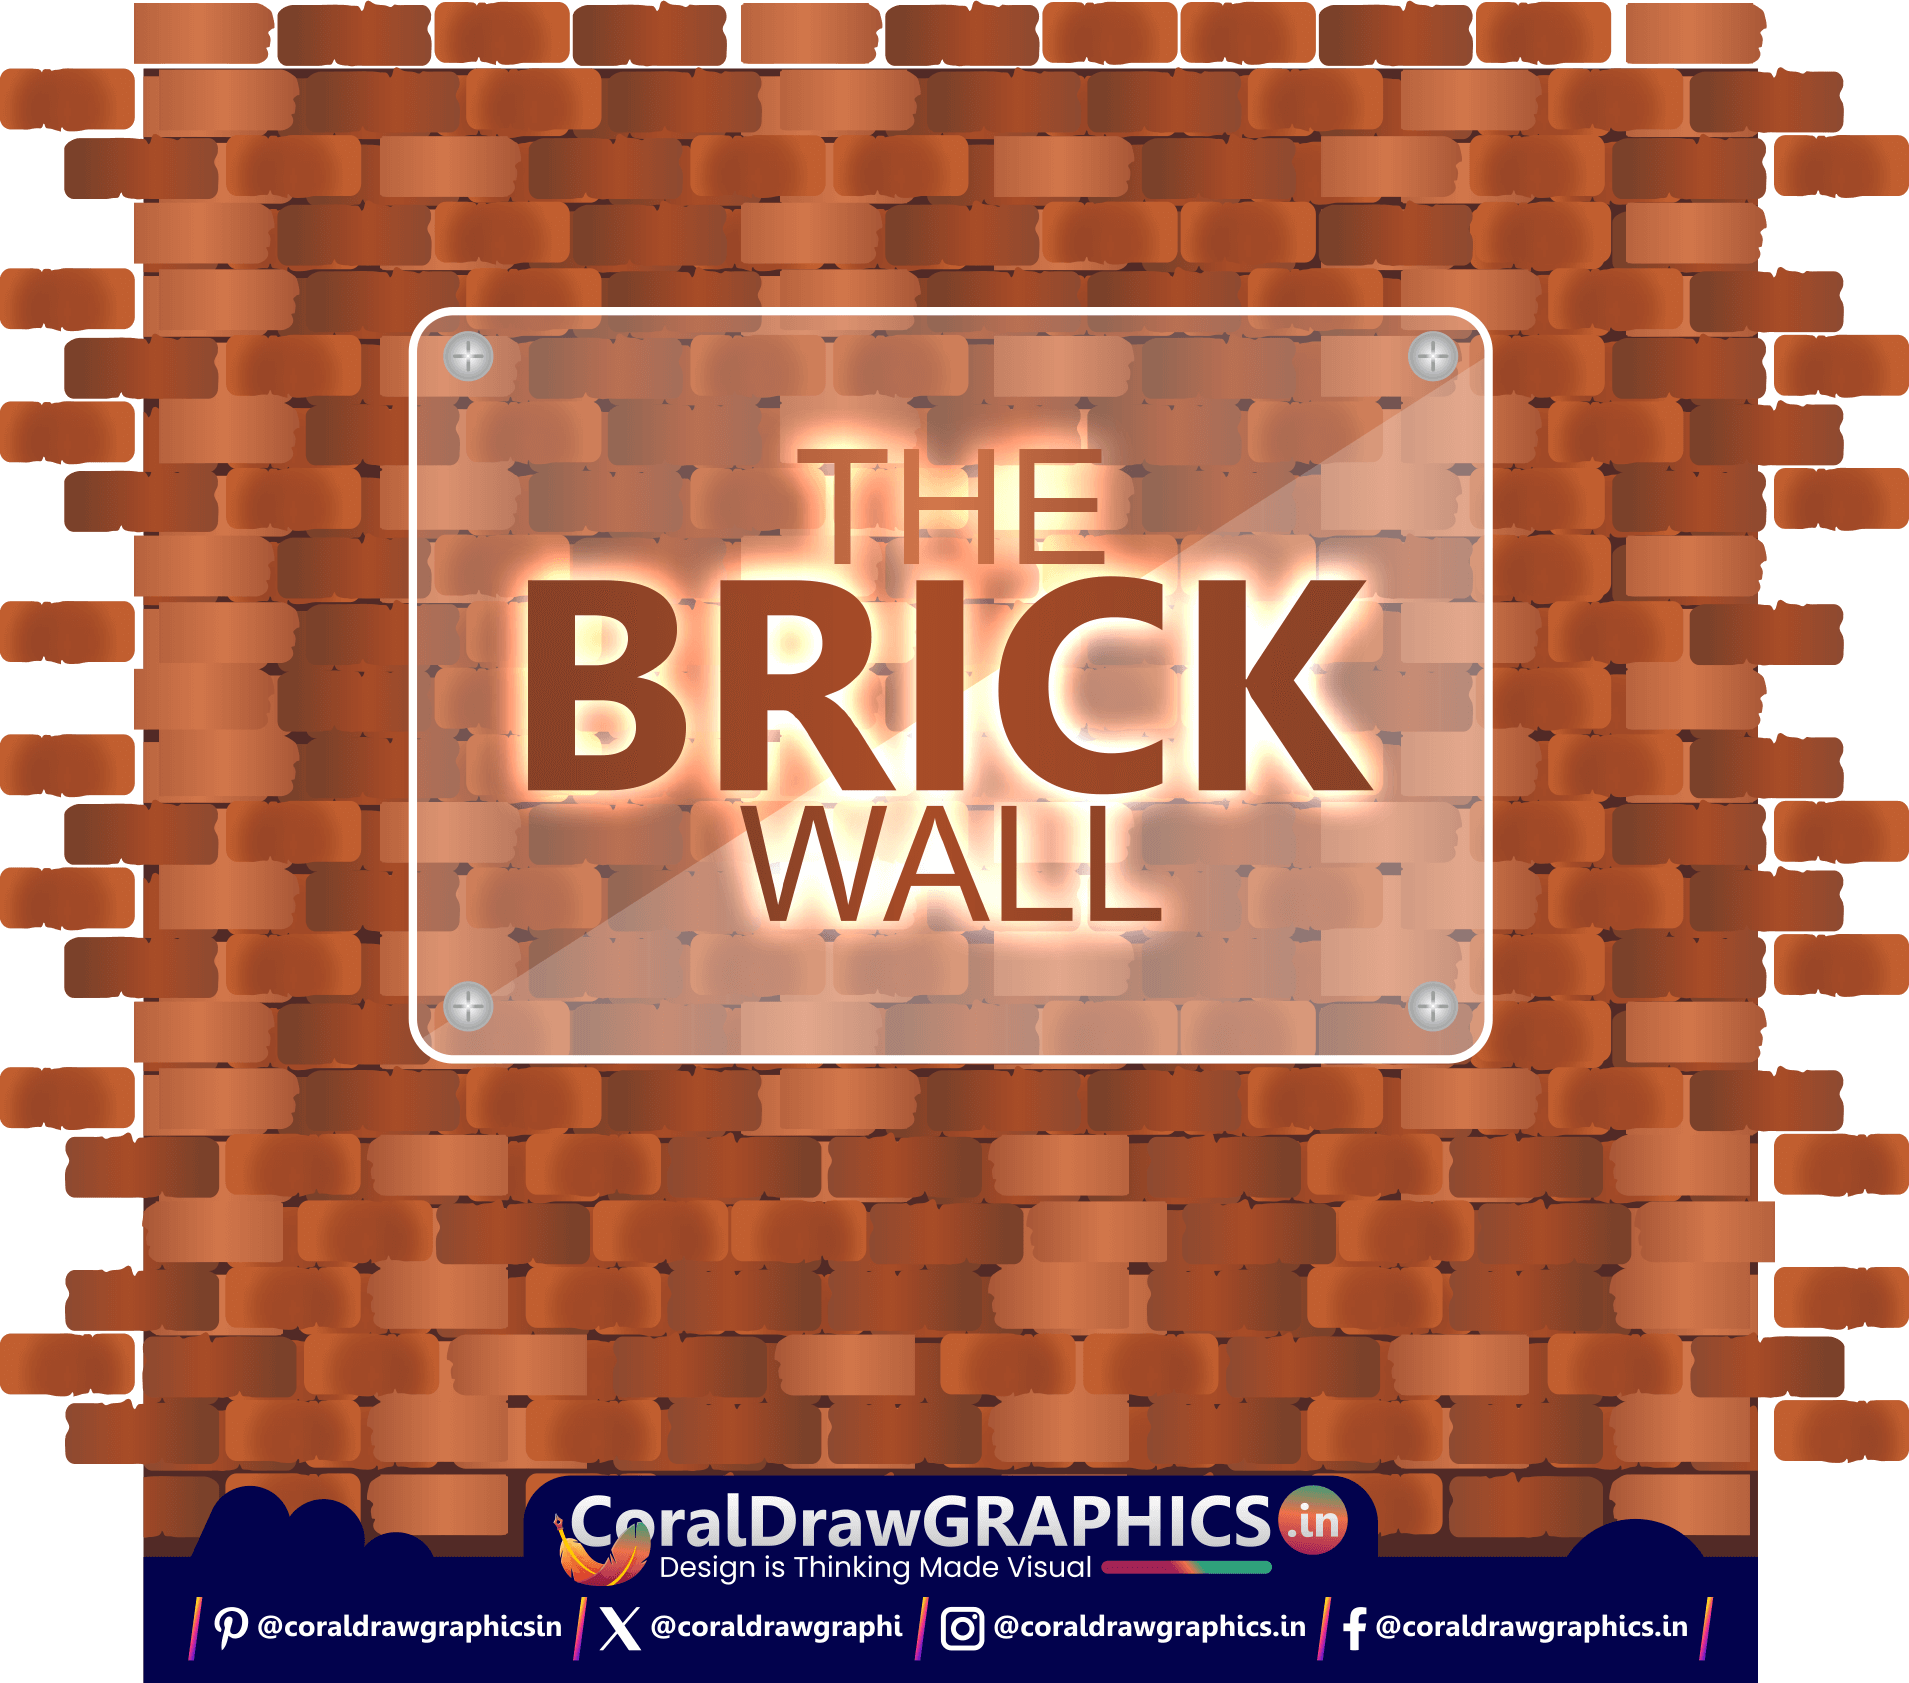 #RedBrickElegance 🧱✨ #VintageVibesBackdrop 🏰 #BrickWallCharm 🎨 #RusticRedDesigns 🌟 #ArchitecturalTextures 🧱 #UrbanBackdropVector 🌆 #TimelessBrickWall 🧱🕰️ #VintageInspiration 🚪 #BrickWallArtistry 🖌️ #RedBrickVectorMagic 🧱💫 #IndustrialAesthetics 🛠️ #DesignsFromThePast 🏛️ #TextureInDesign 🌐 #VintageVectorBackground 🎨 #UrbanChicBackdrop 🌆 #OldWorldCharmDesigns 🌍 #BrickWallElegance 🧱🌹 #RetroRevivalVectors 🔄 #ArchitecturalHeritageDesigns 🏰 #RedBrickCanvas 🧱🎨